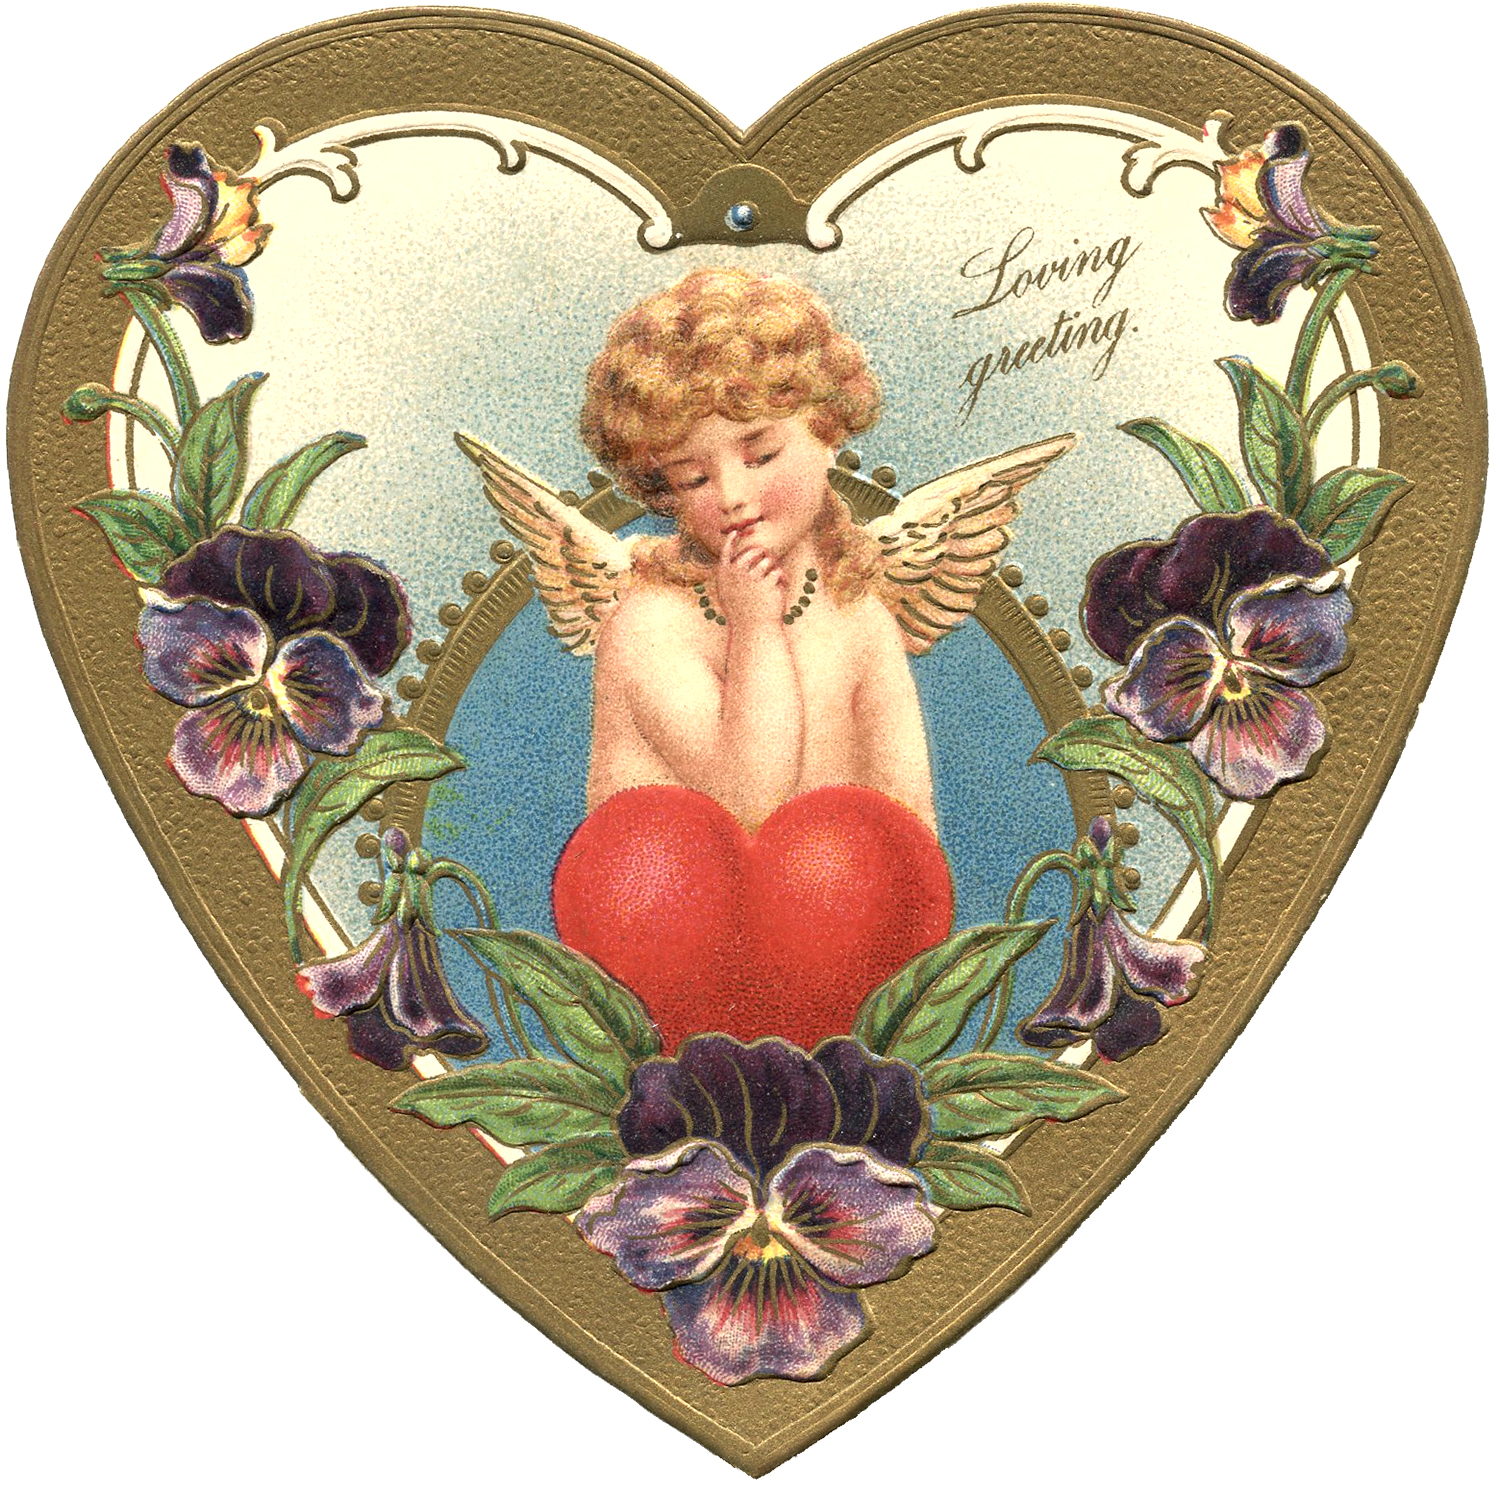 Victorian Valentine Image - The Graphics Fairy